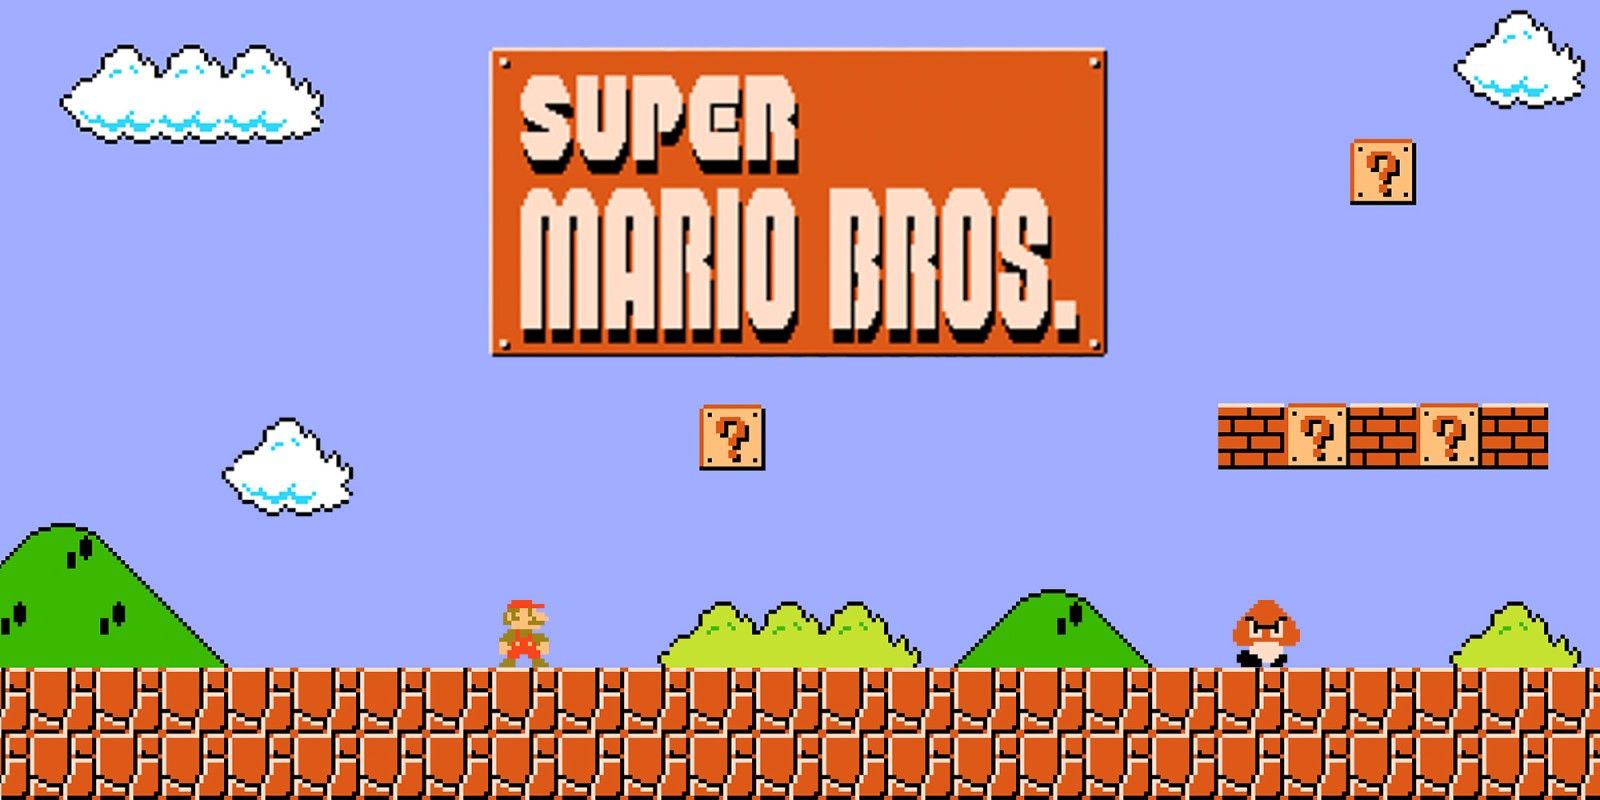 Title screen in Super Mario Bros.